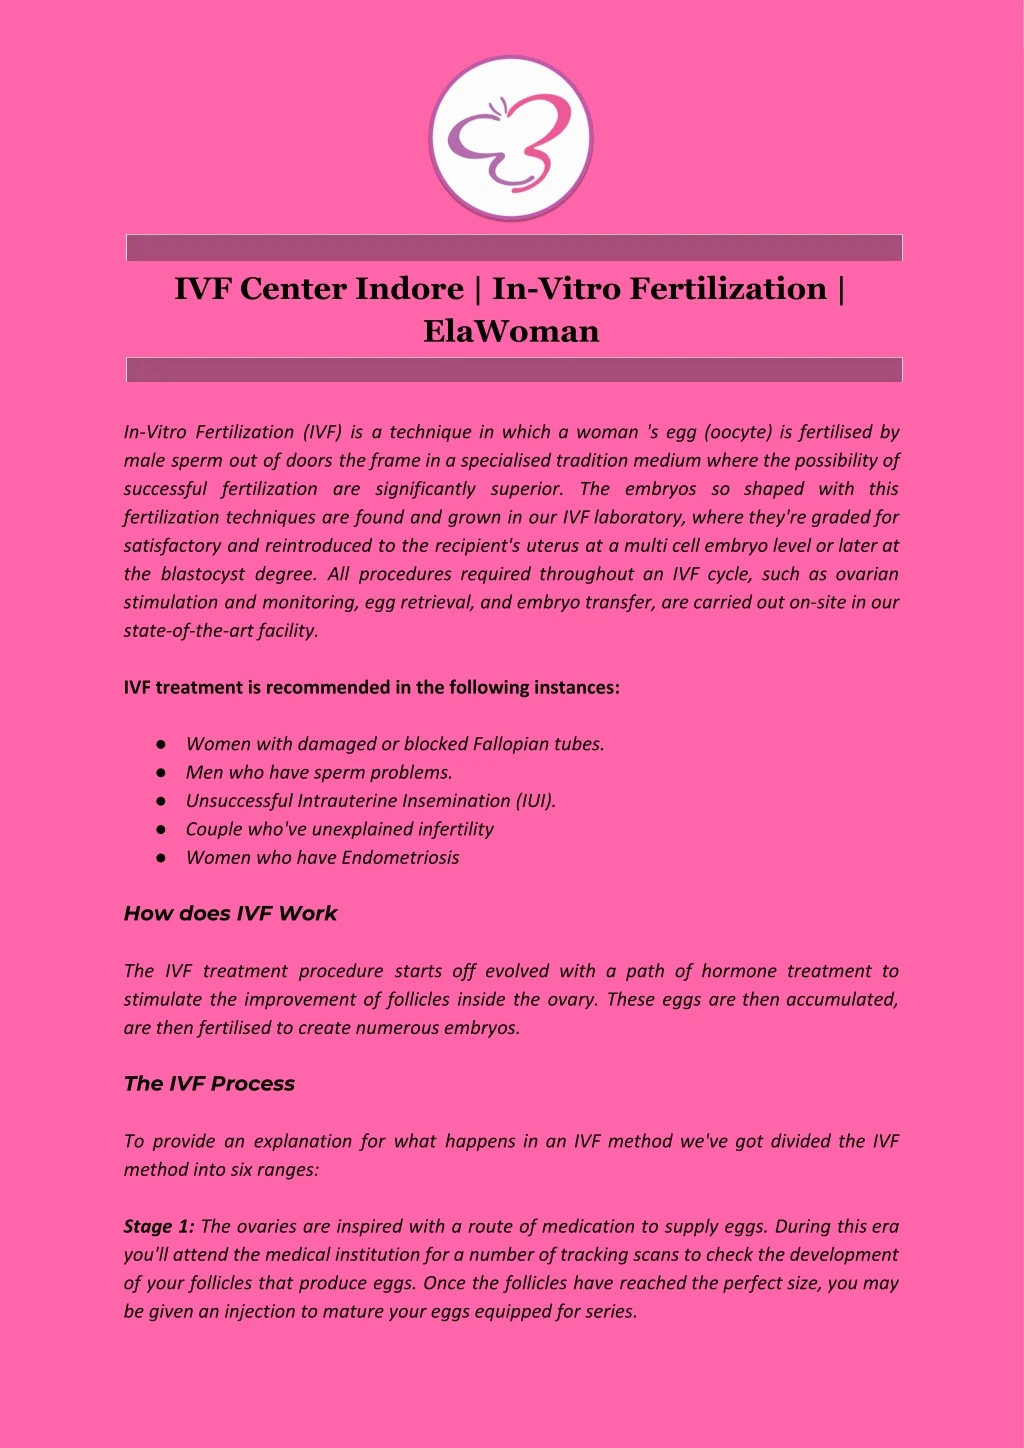 ivf center indore in vitro fertilization elawoman